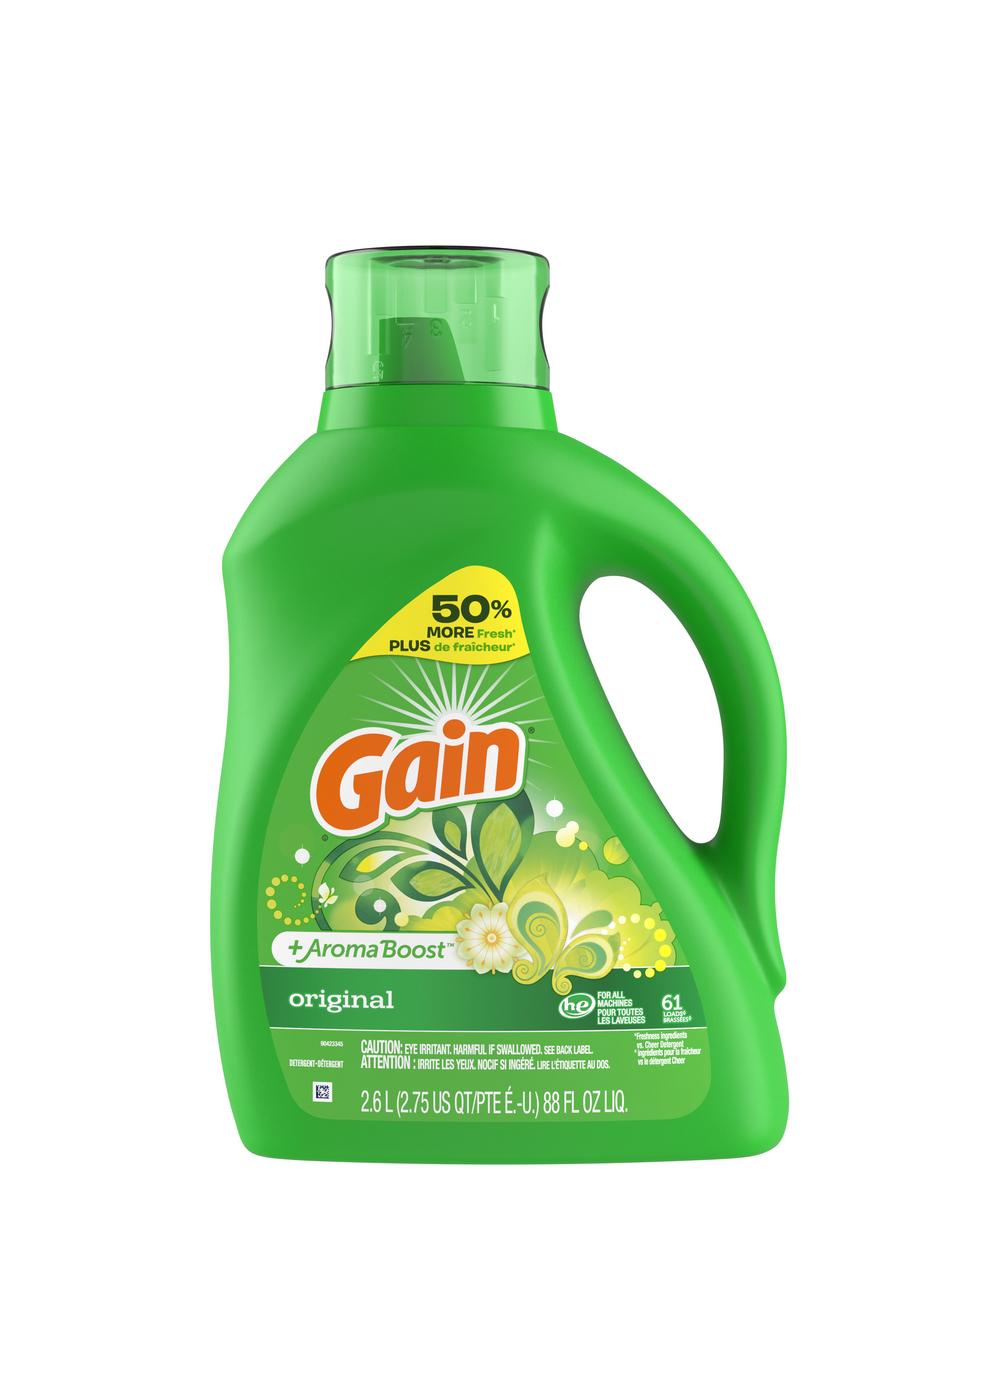 Gain + Aroma Boost HE Liquid Laundry Detergent, 61 Loads - Original; image 7 of 9